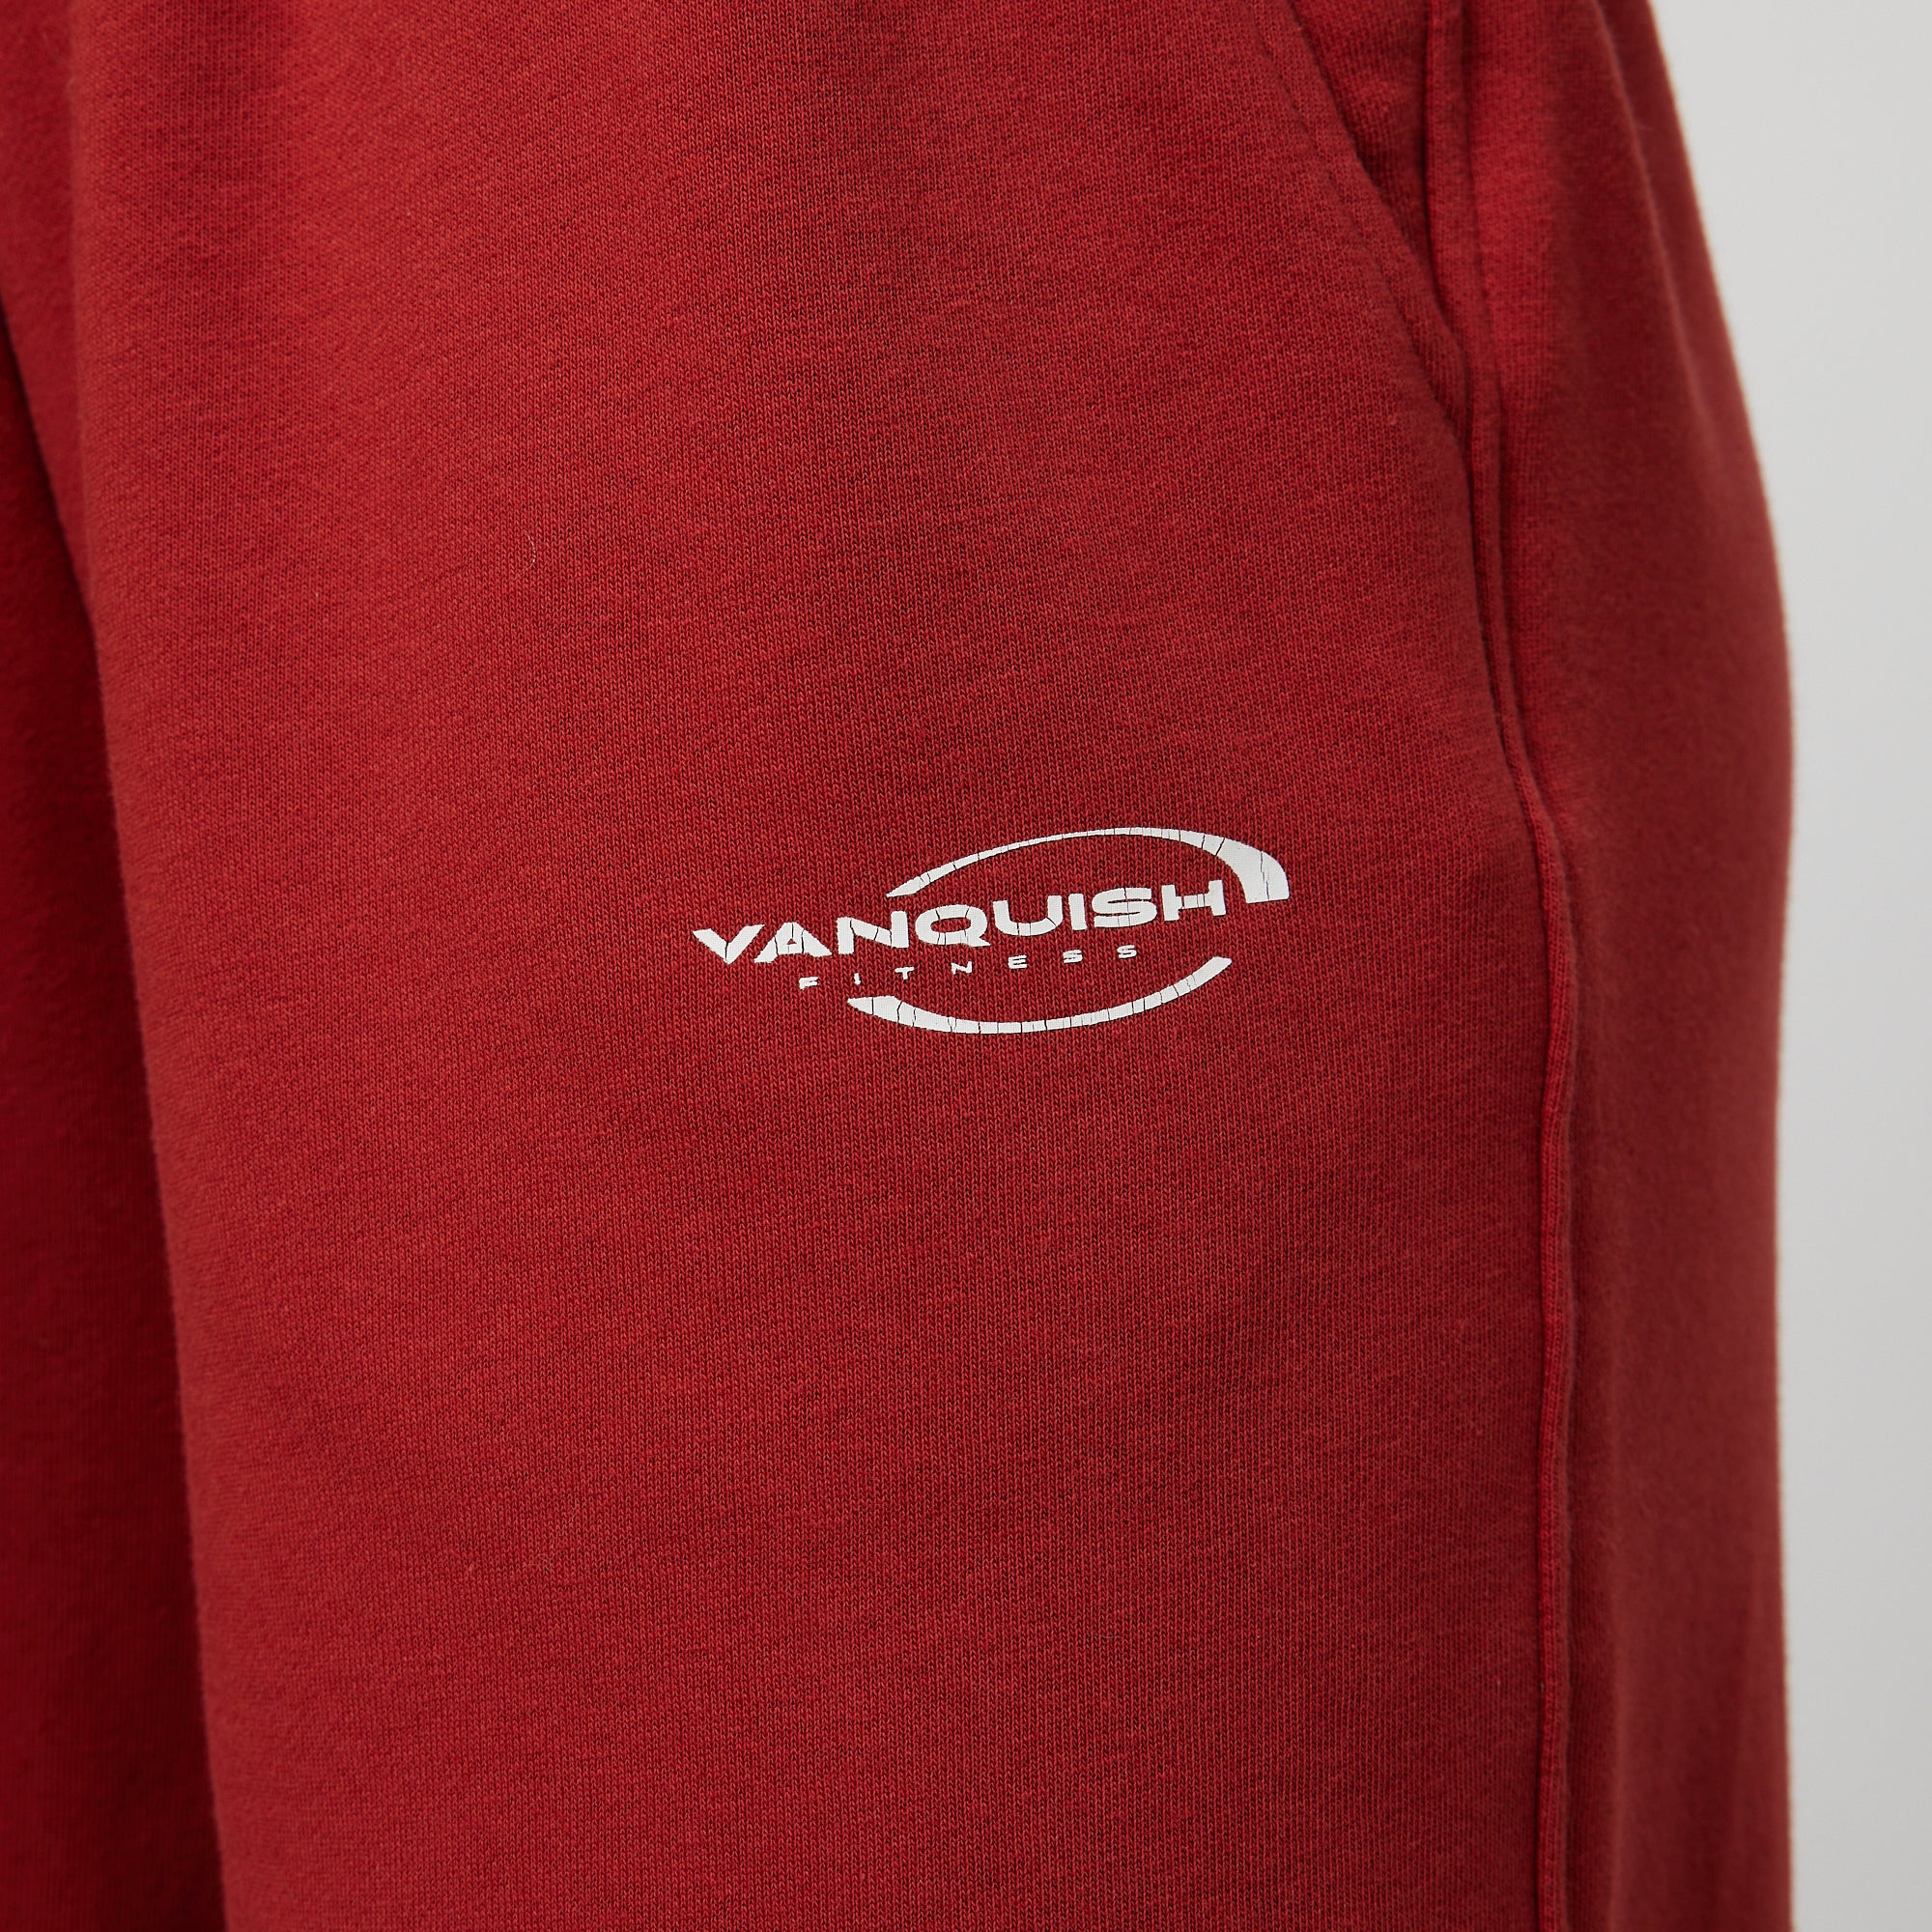 Vanquish Enhance Chilli Red Oversized Sweatpants